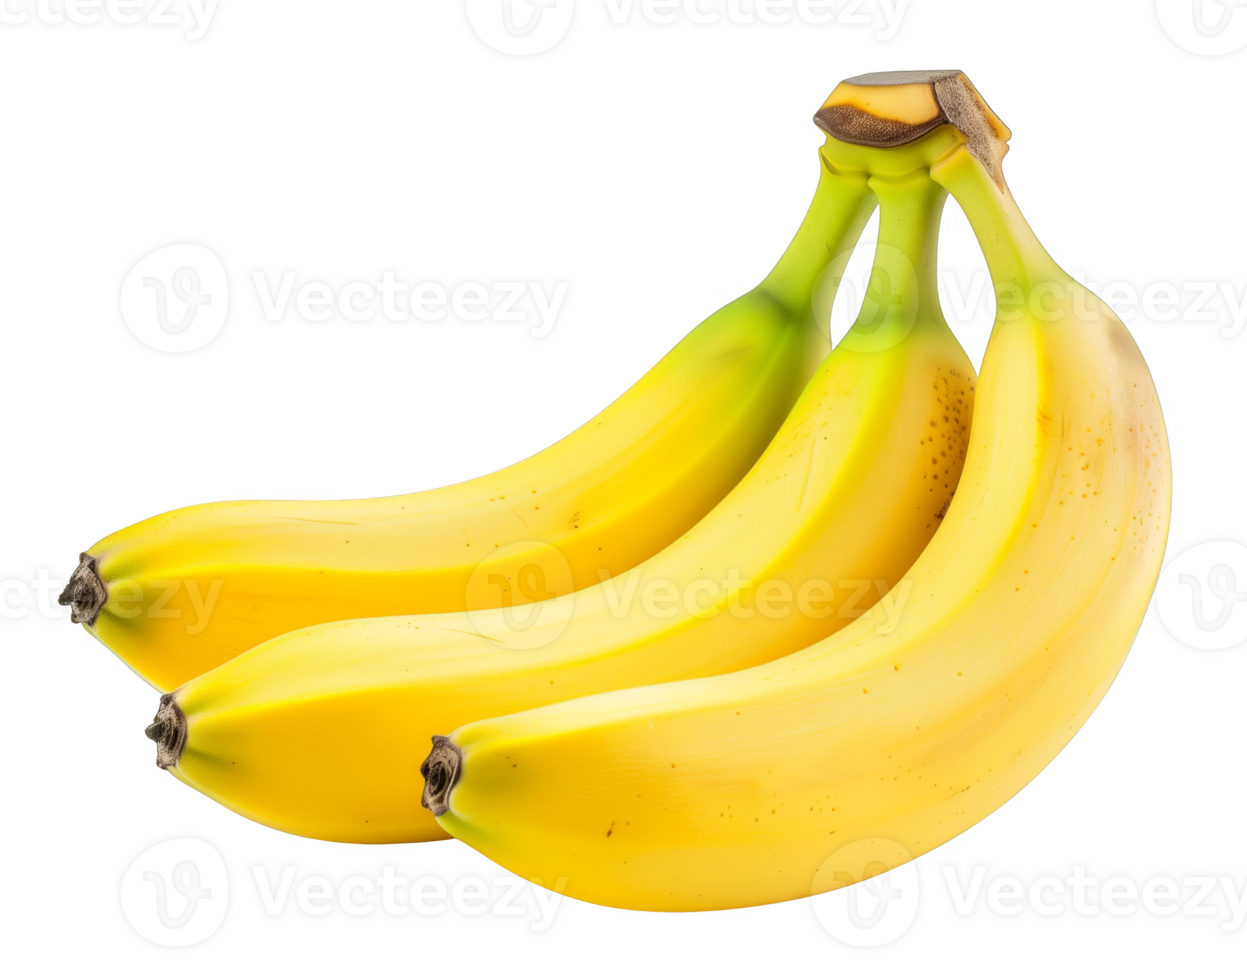 ai generato banane su trasparente sfondo png